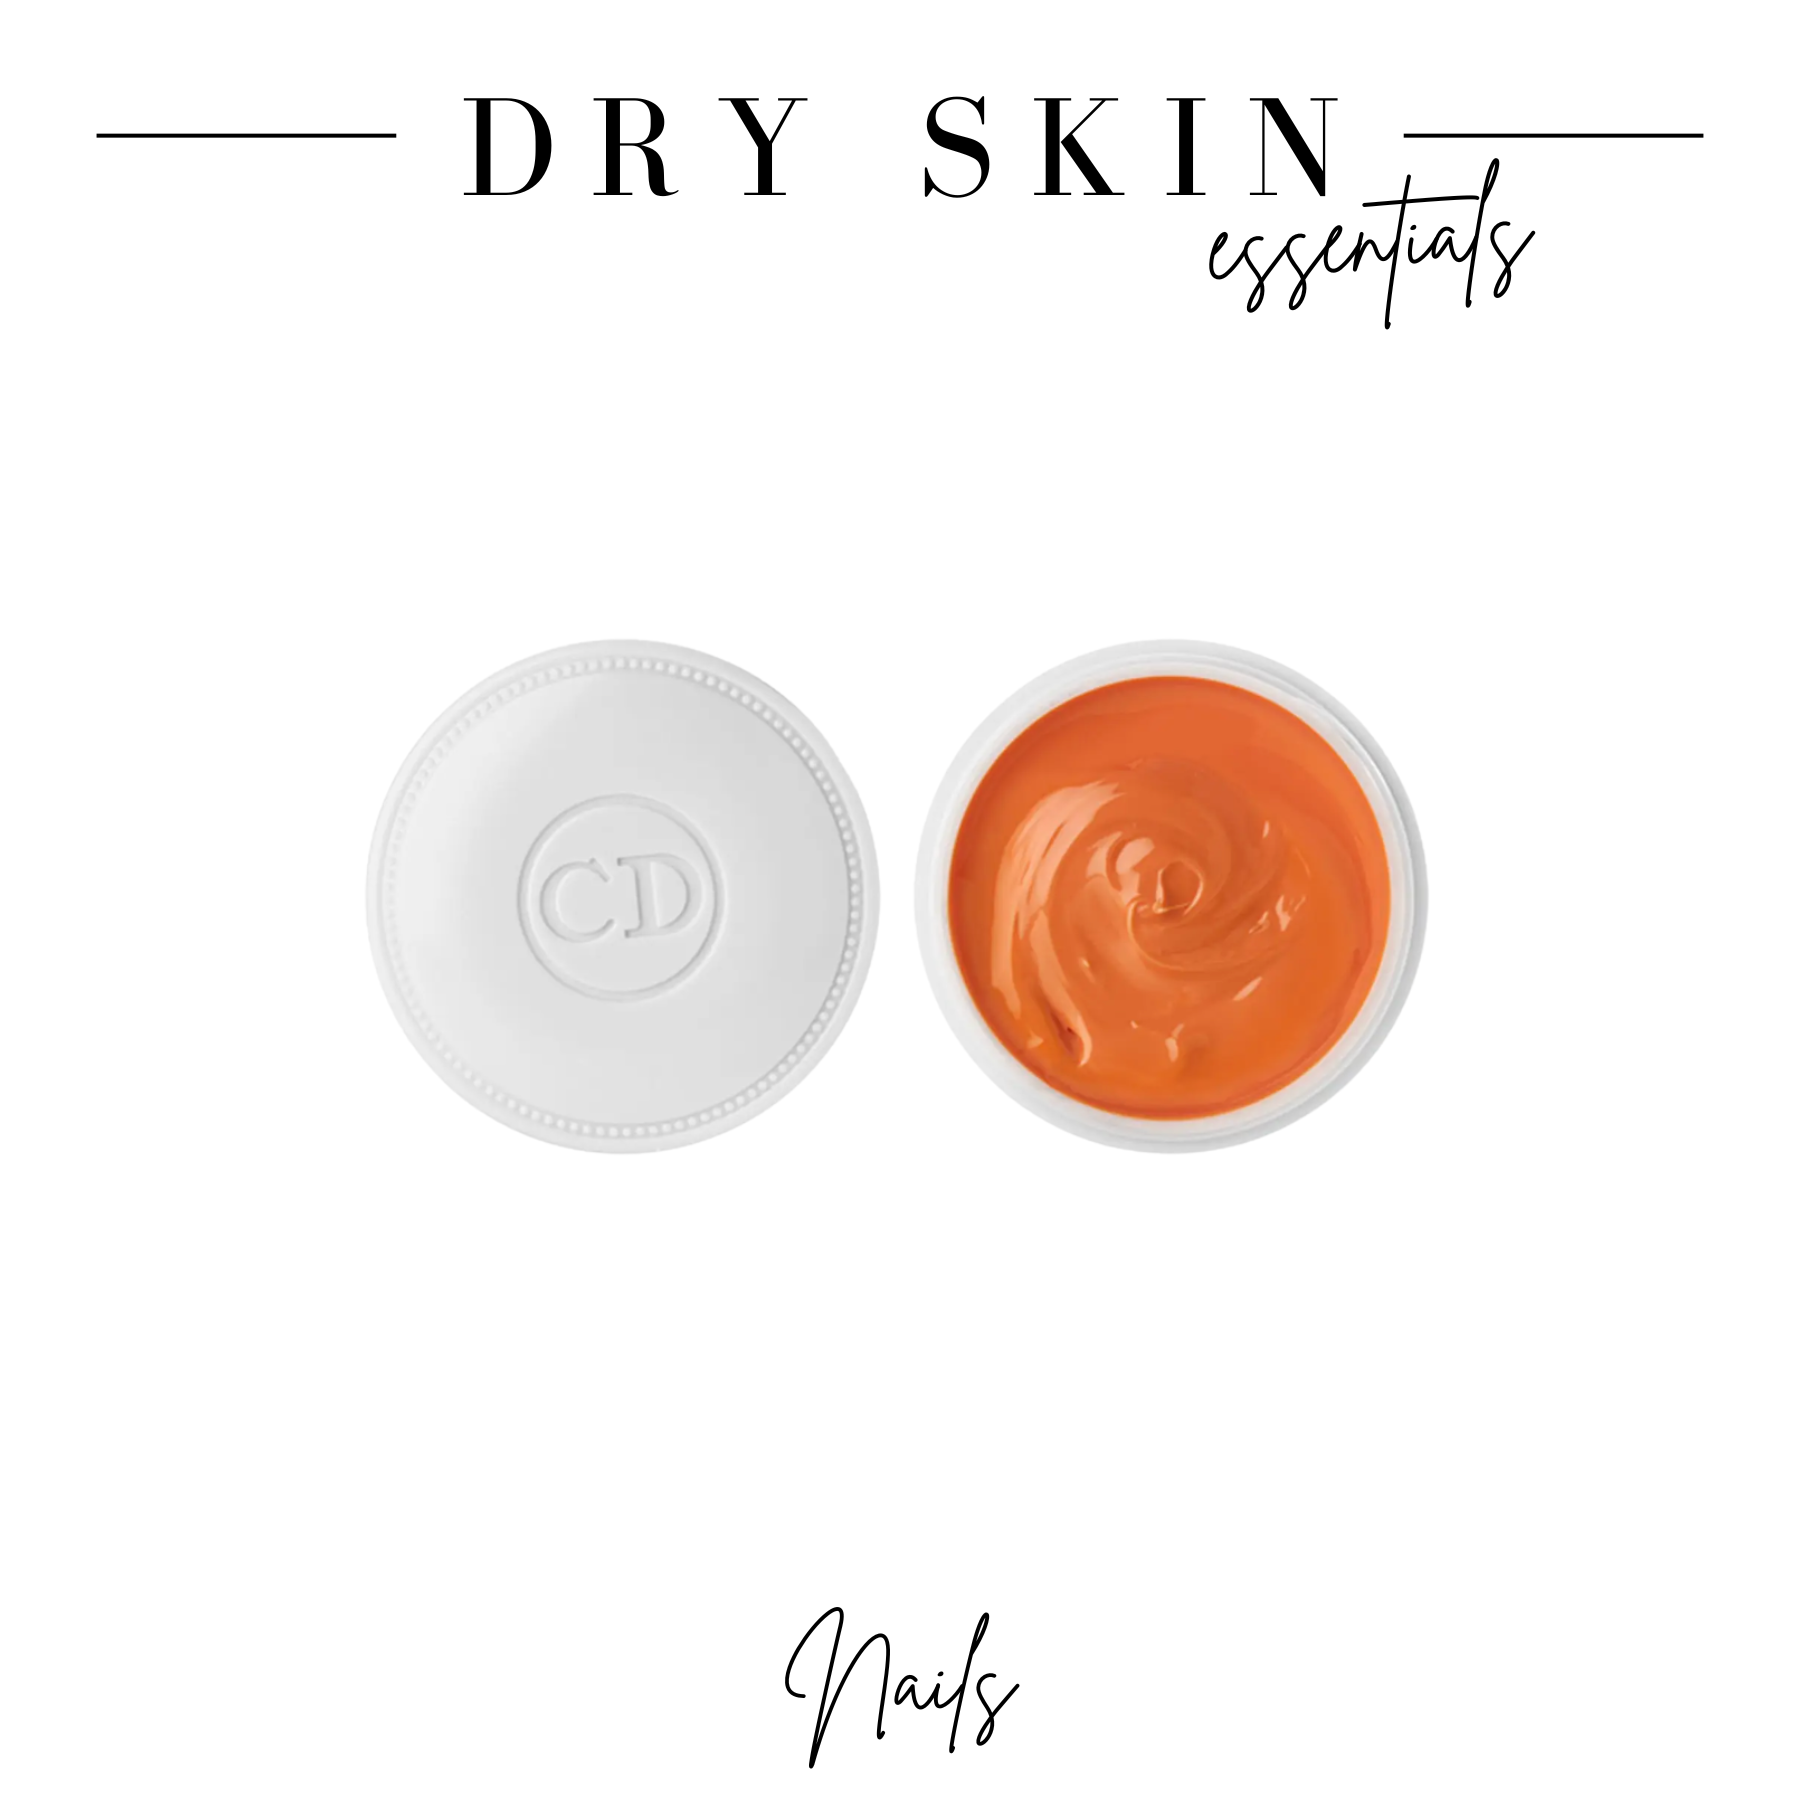 Dry Skin Essentials

#dryskin #essentials #skincare #skincareessentials #dryskin #howto #lipoil #moisturizer #bodycare #bodycream #eyecream